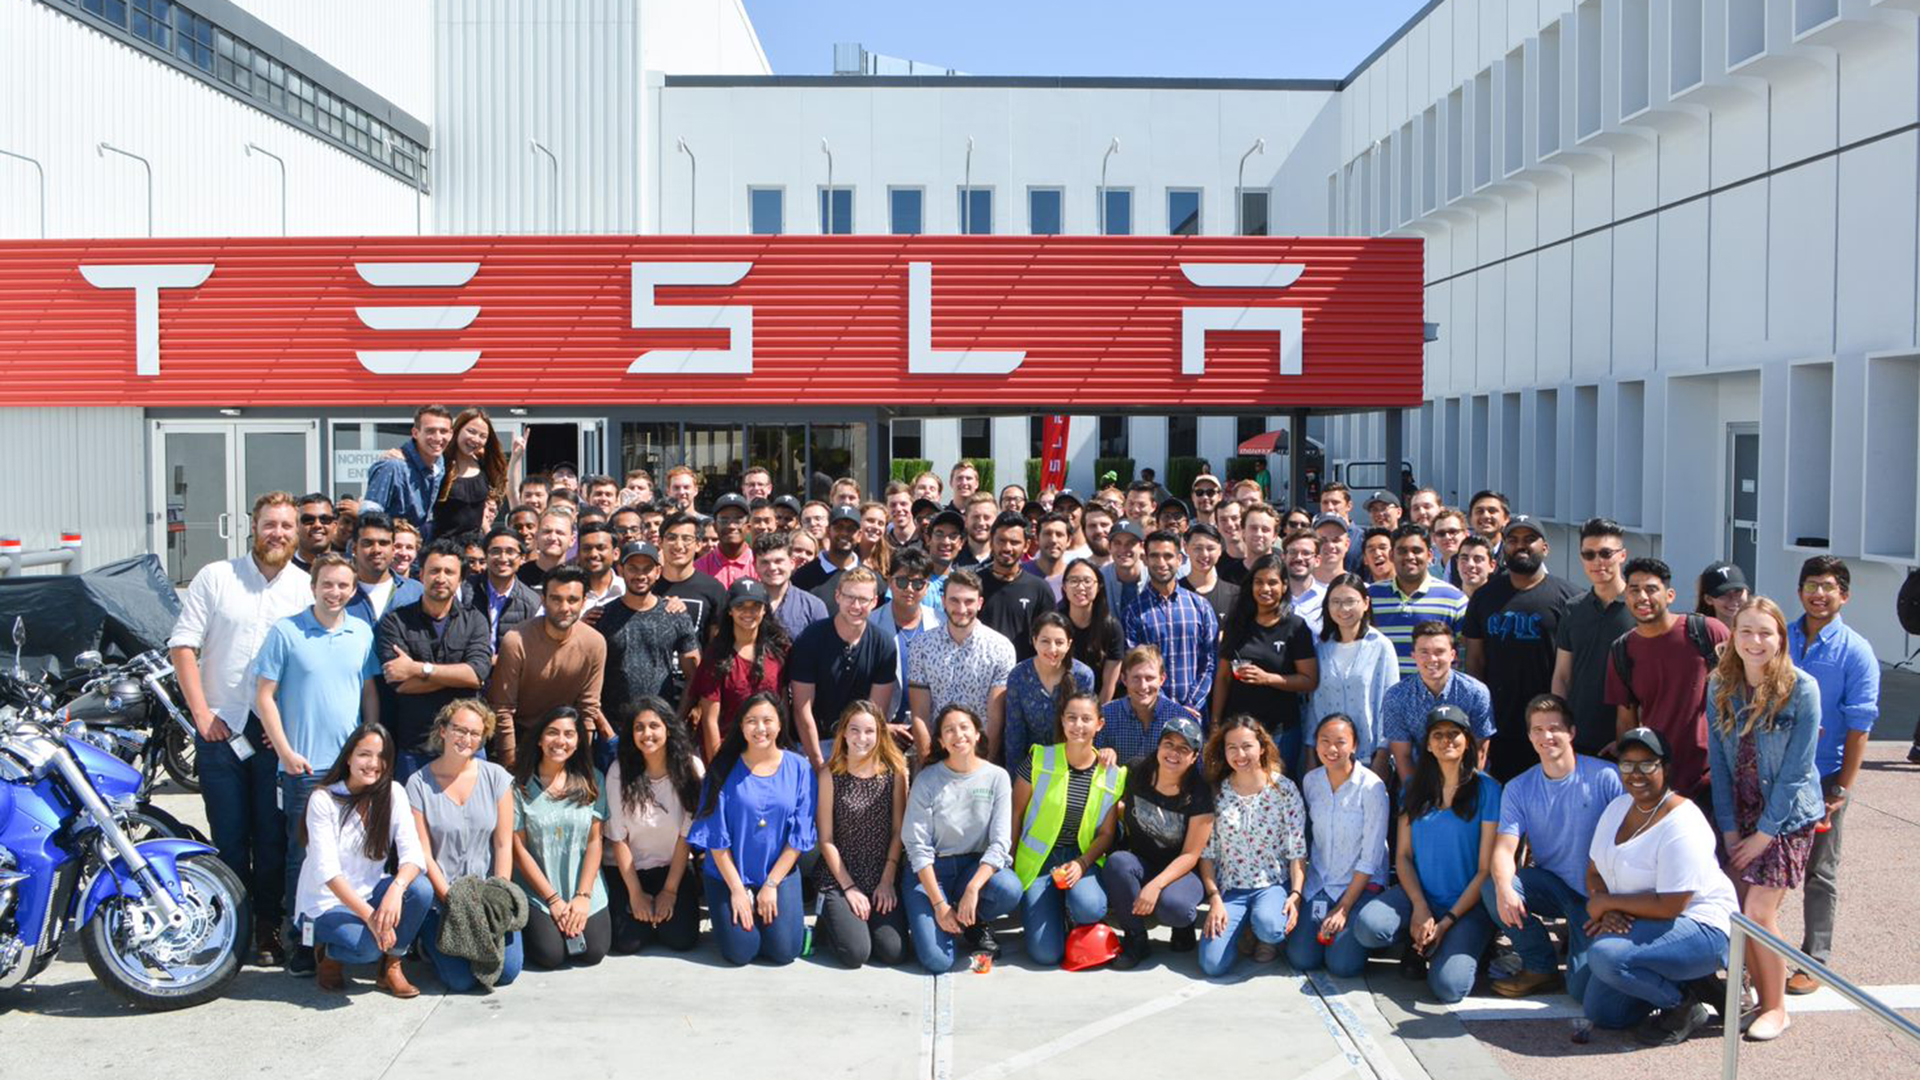 huge group photo outside the Tesla building